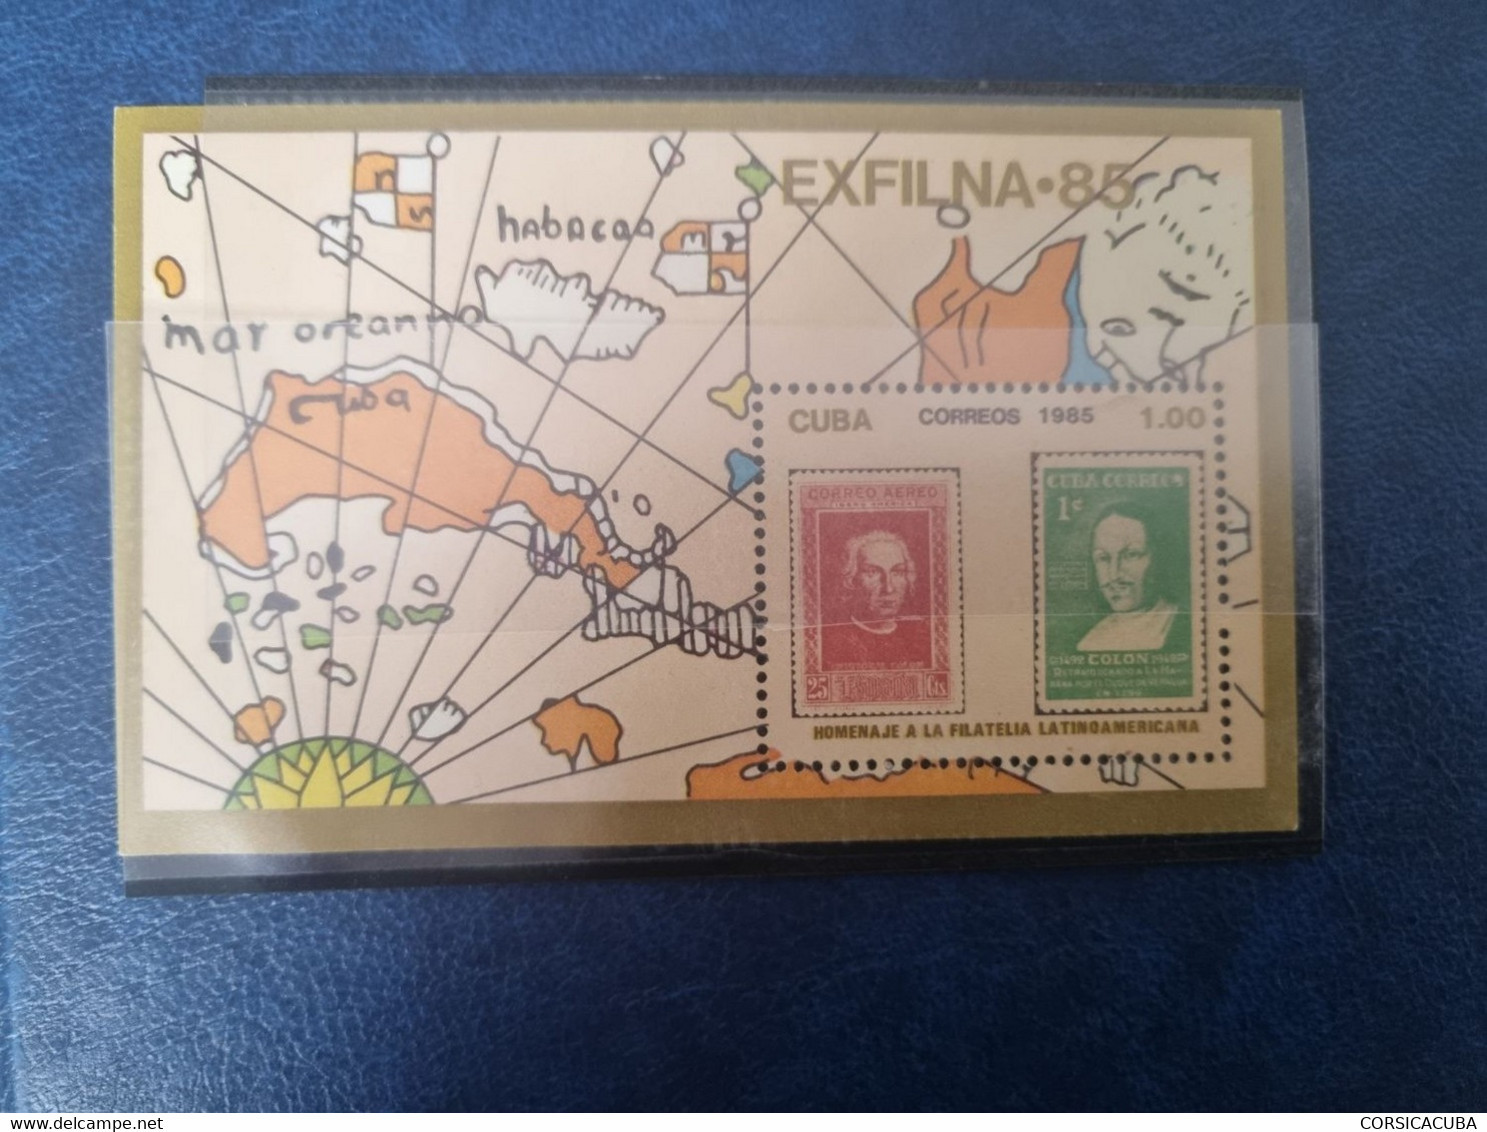 CUBA  NEUF  1985    HB  EXPO.  FILATELICA  EXFILNA  85    //  PARFAIT  ETAT  //  1er  CHOIX  // - Unused Stamps